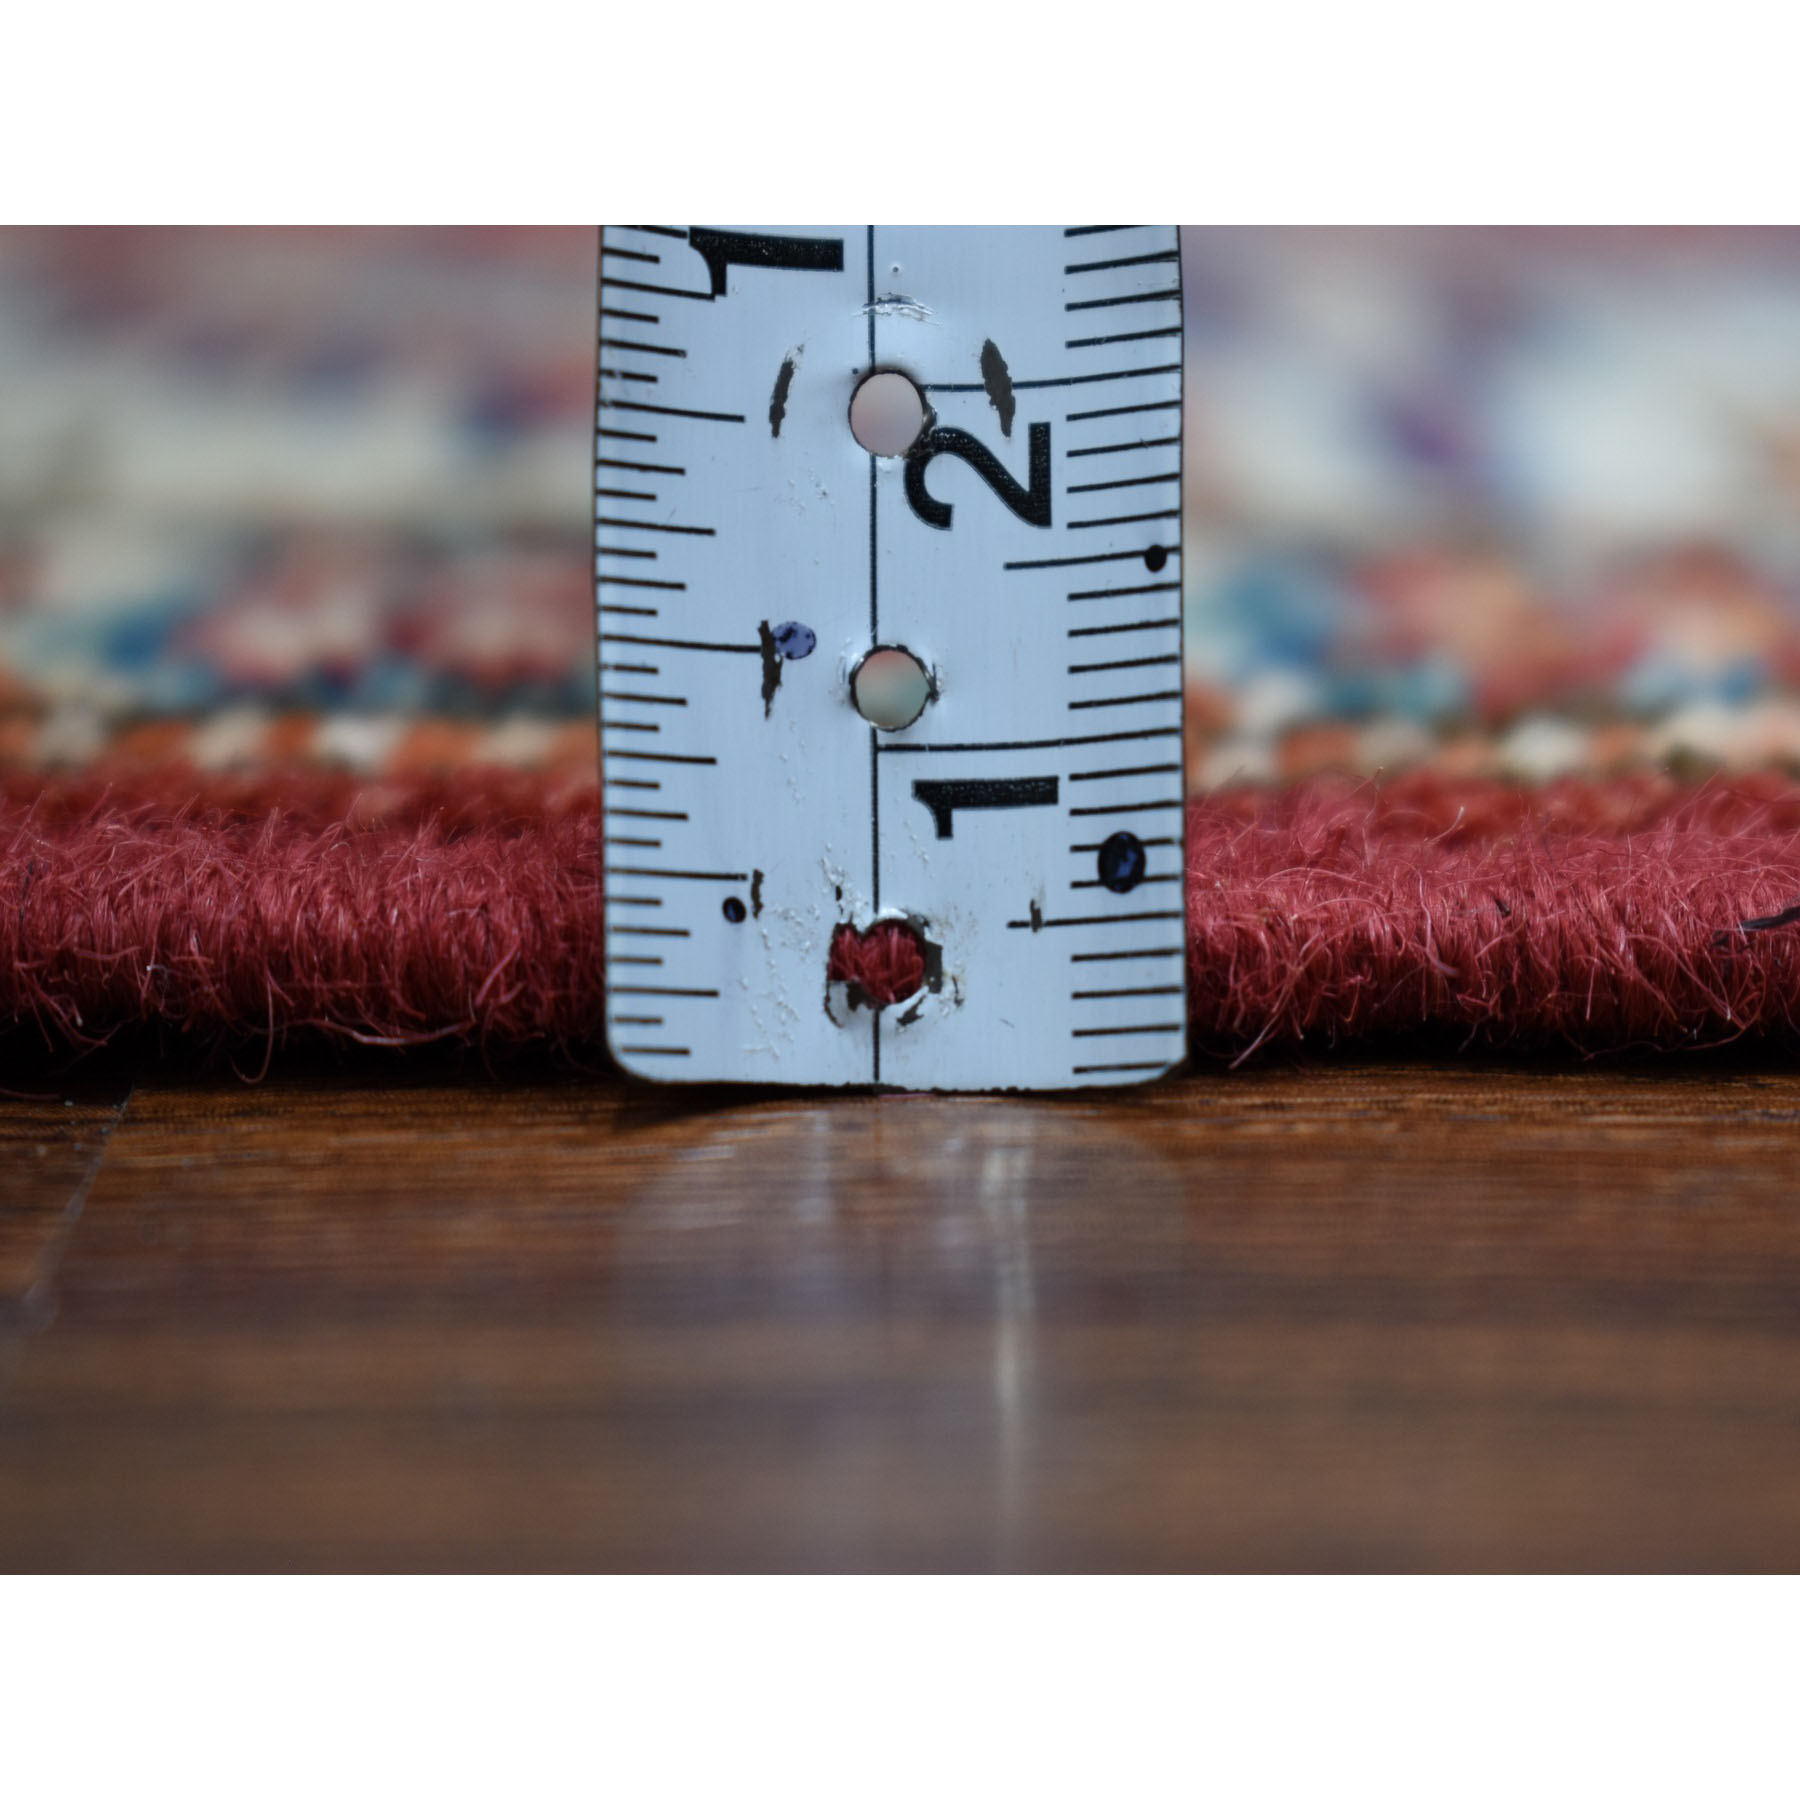 1-10 x6-4   Red Super Kazak Pure Wool Geometric Design Hand-Knotted Runner Oriental Rug 